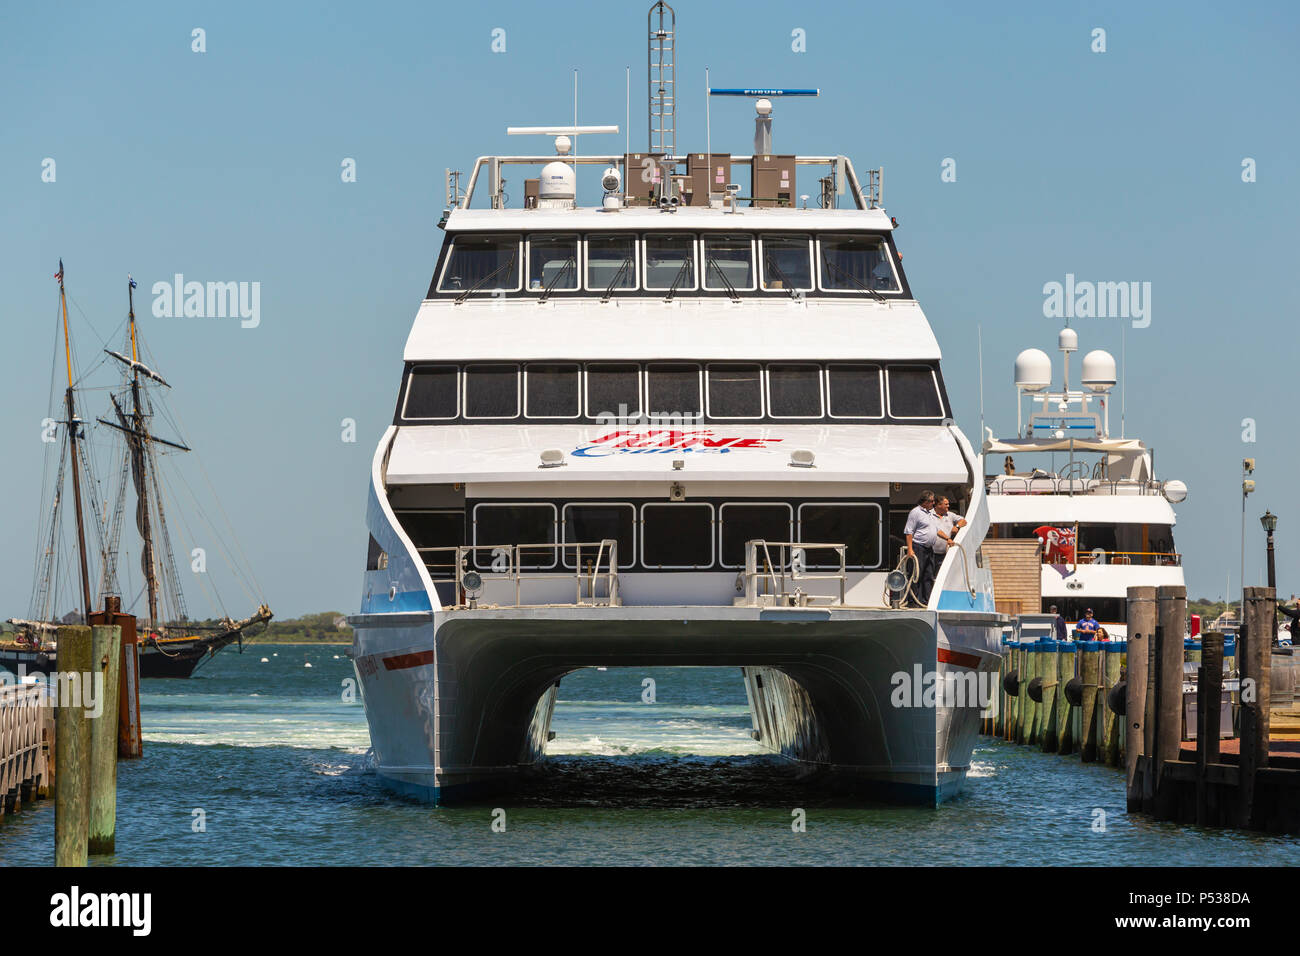 A Hy-Line Cruises high-speed catamaran ferry prepares to dock at Straight Wharf in Nantucket, Massachusetts. Stock Photo